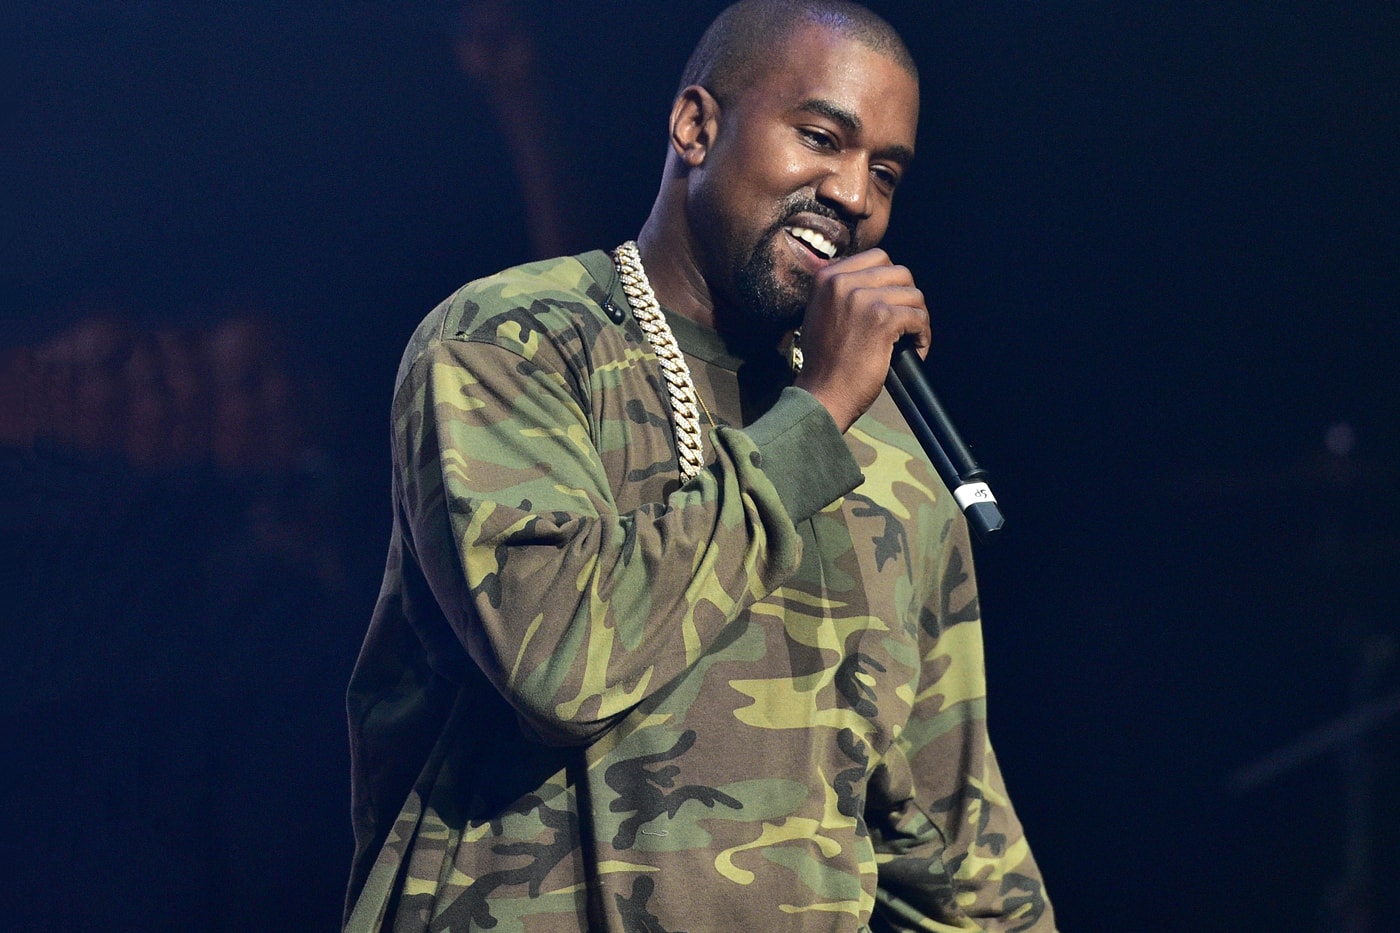 Someone Made a GoFundMe For Kanye West's $53 Million "Debt"